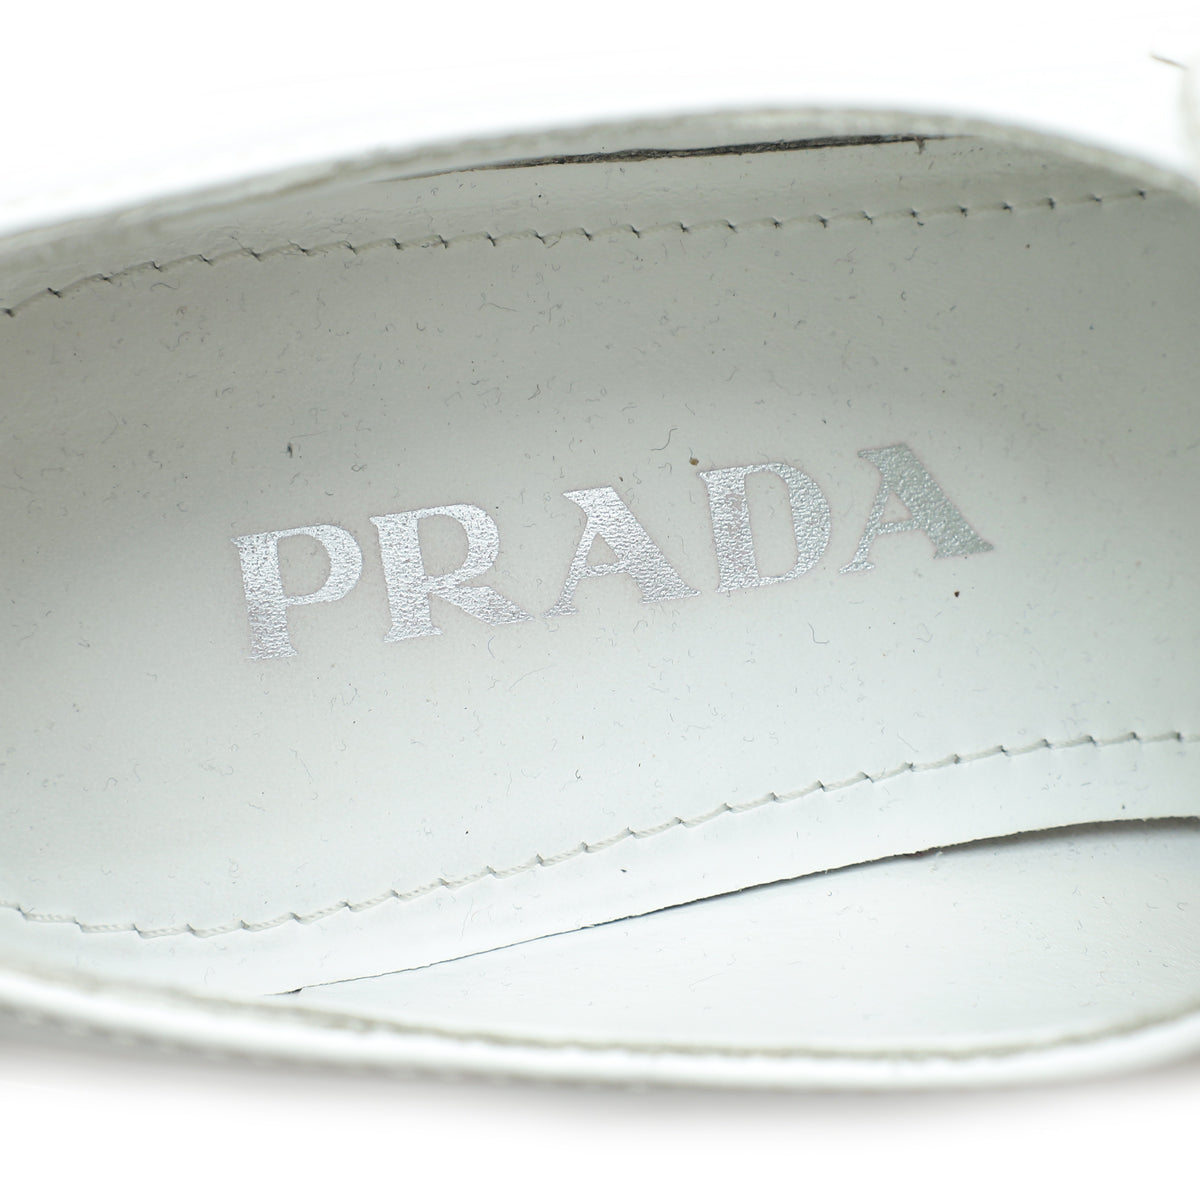 Prada White Brushed Loafers 36